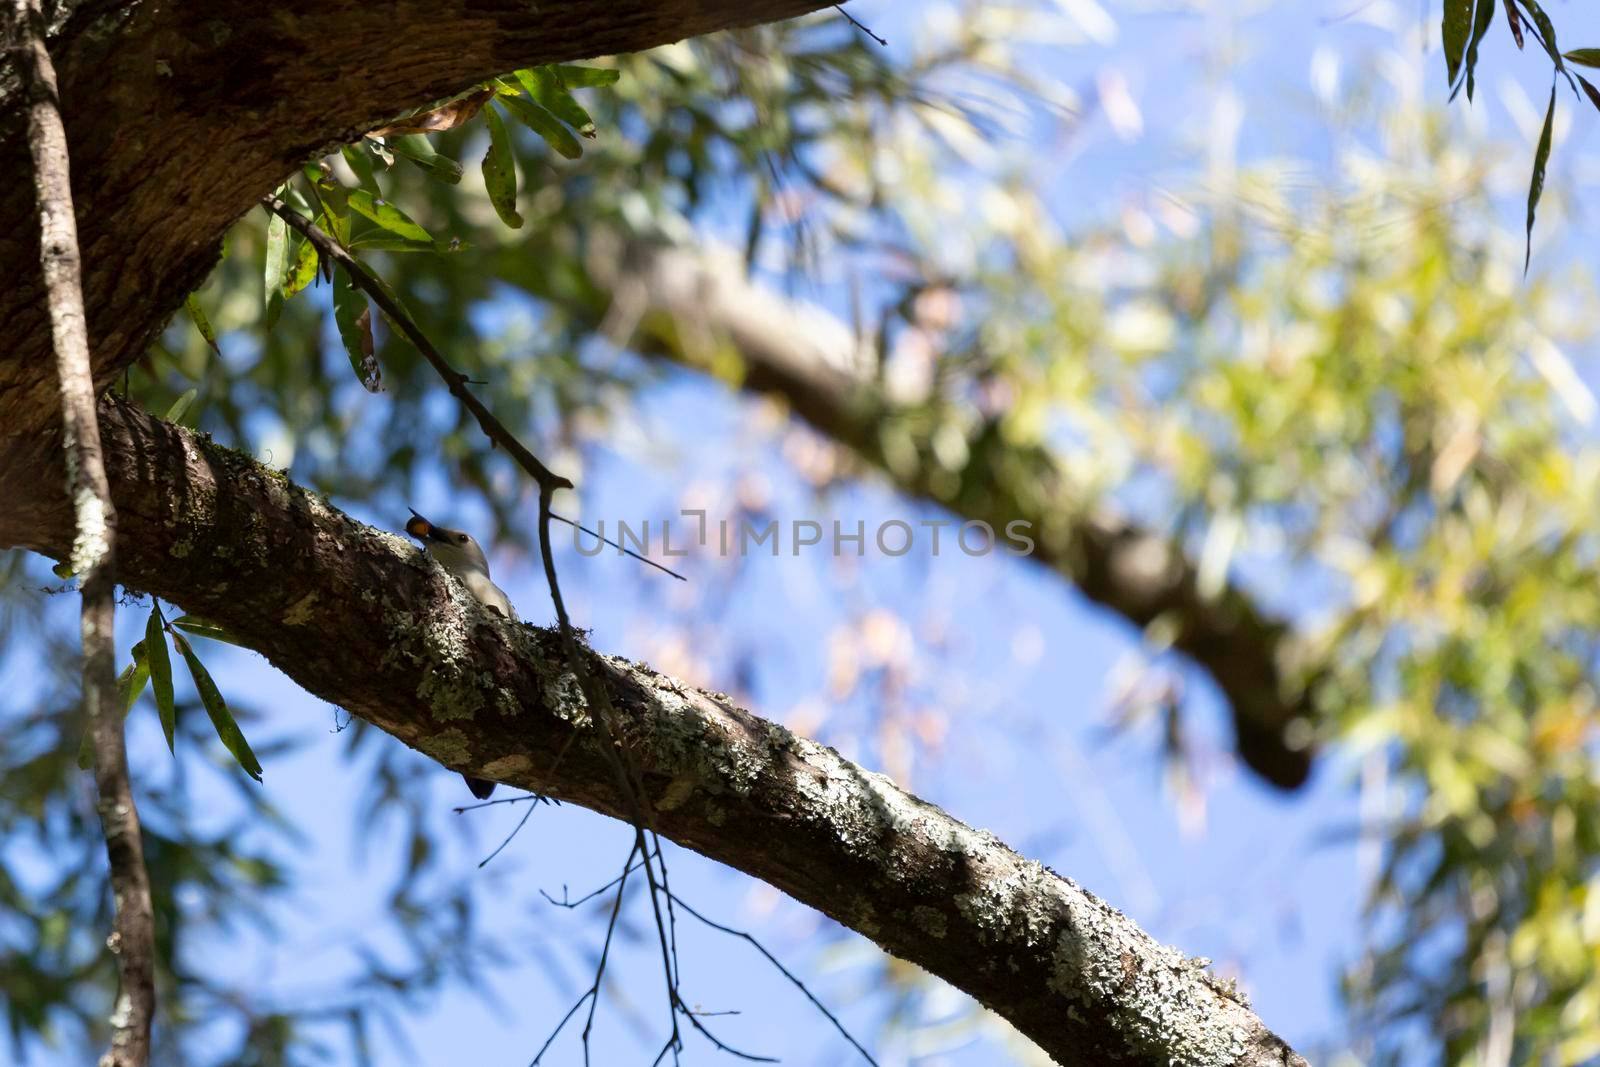 Red-bellied woodpecker (Melanerpes carolinus) eating an acorn on a tree limb